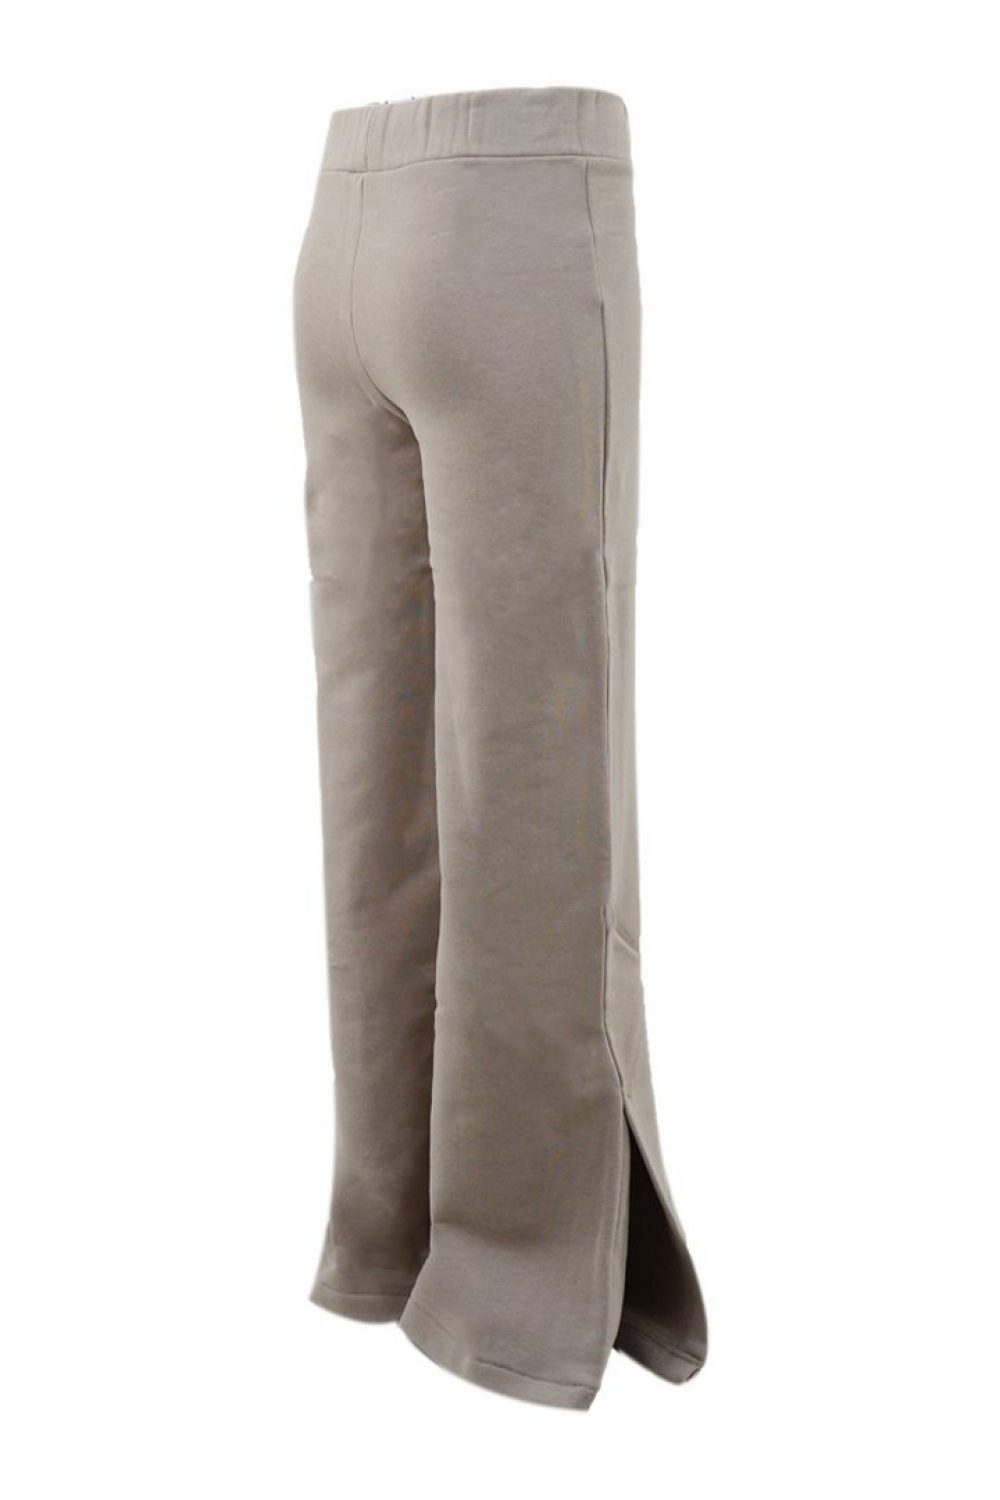 KARL KANI Pants Wide Leg Small Signature Women - Taupe (KW221-072-1)